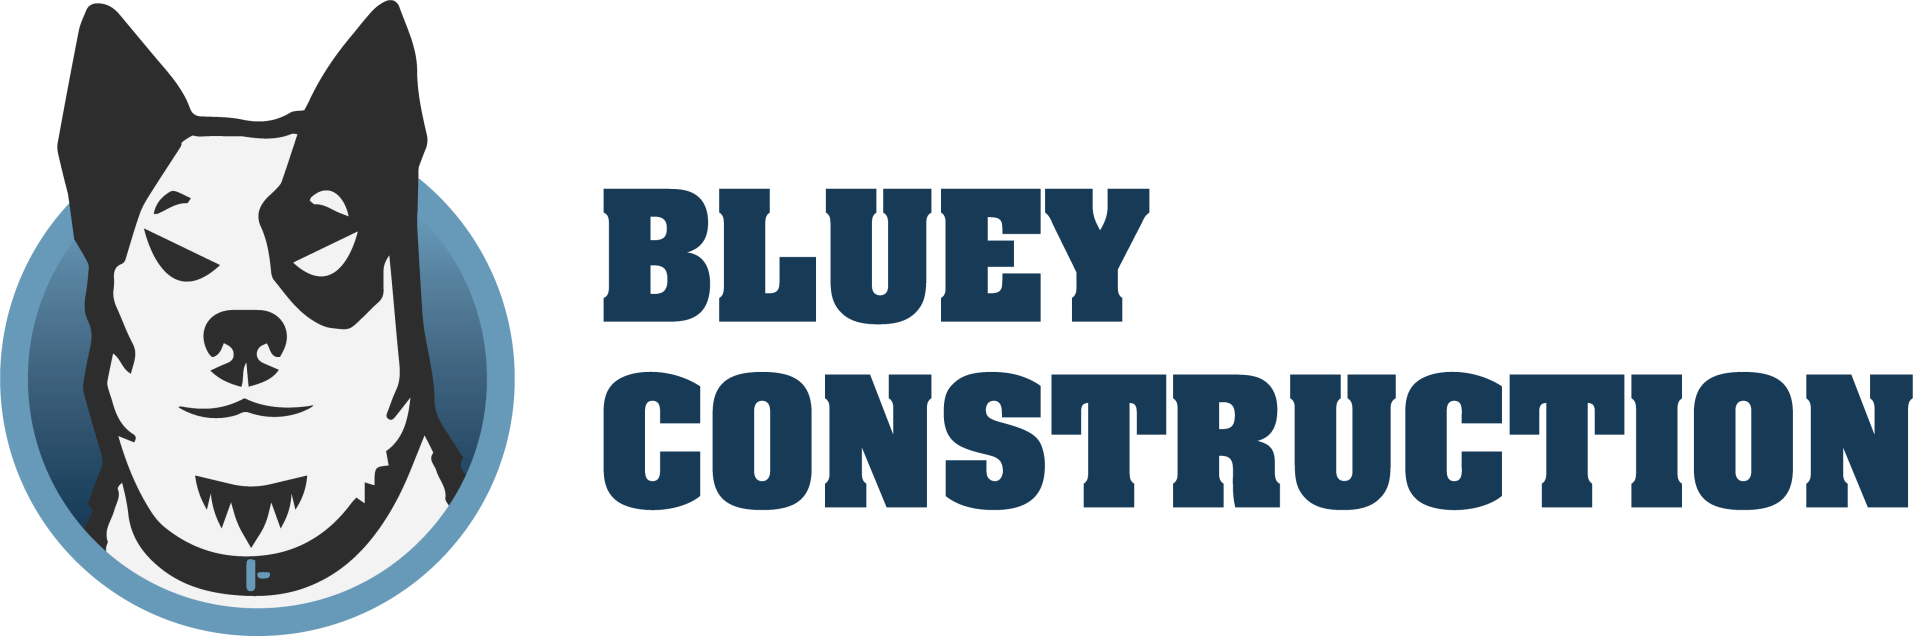 Bluey Construction Logo